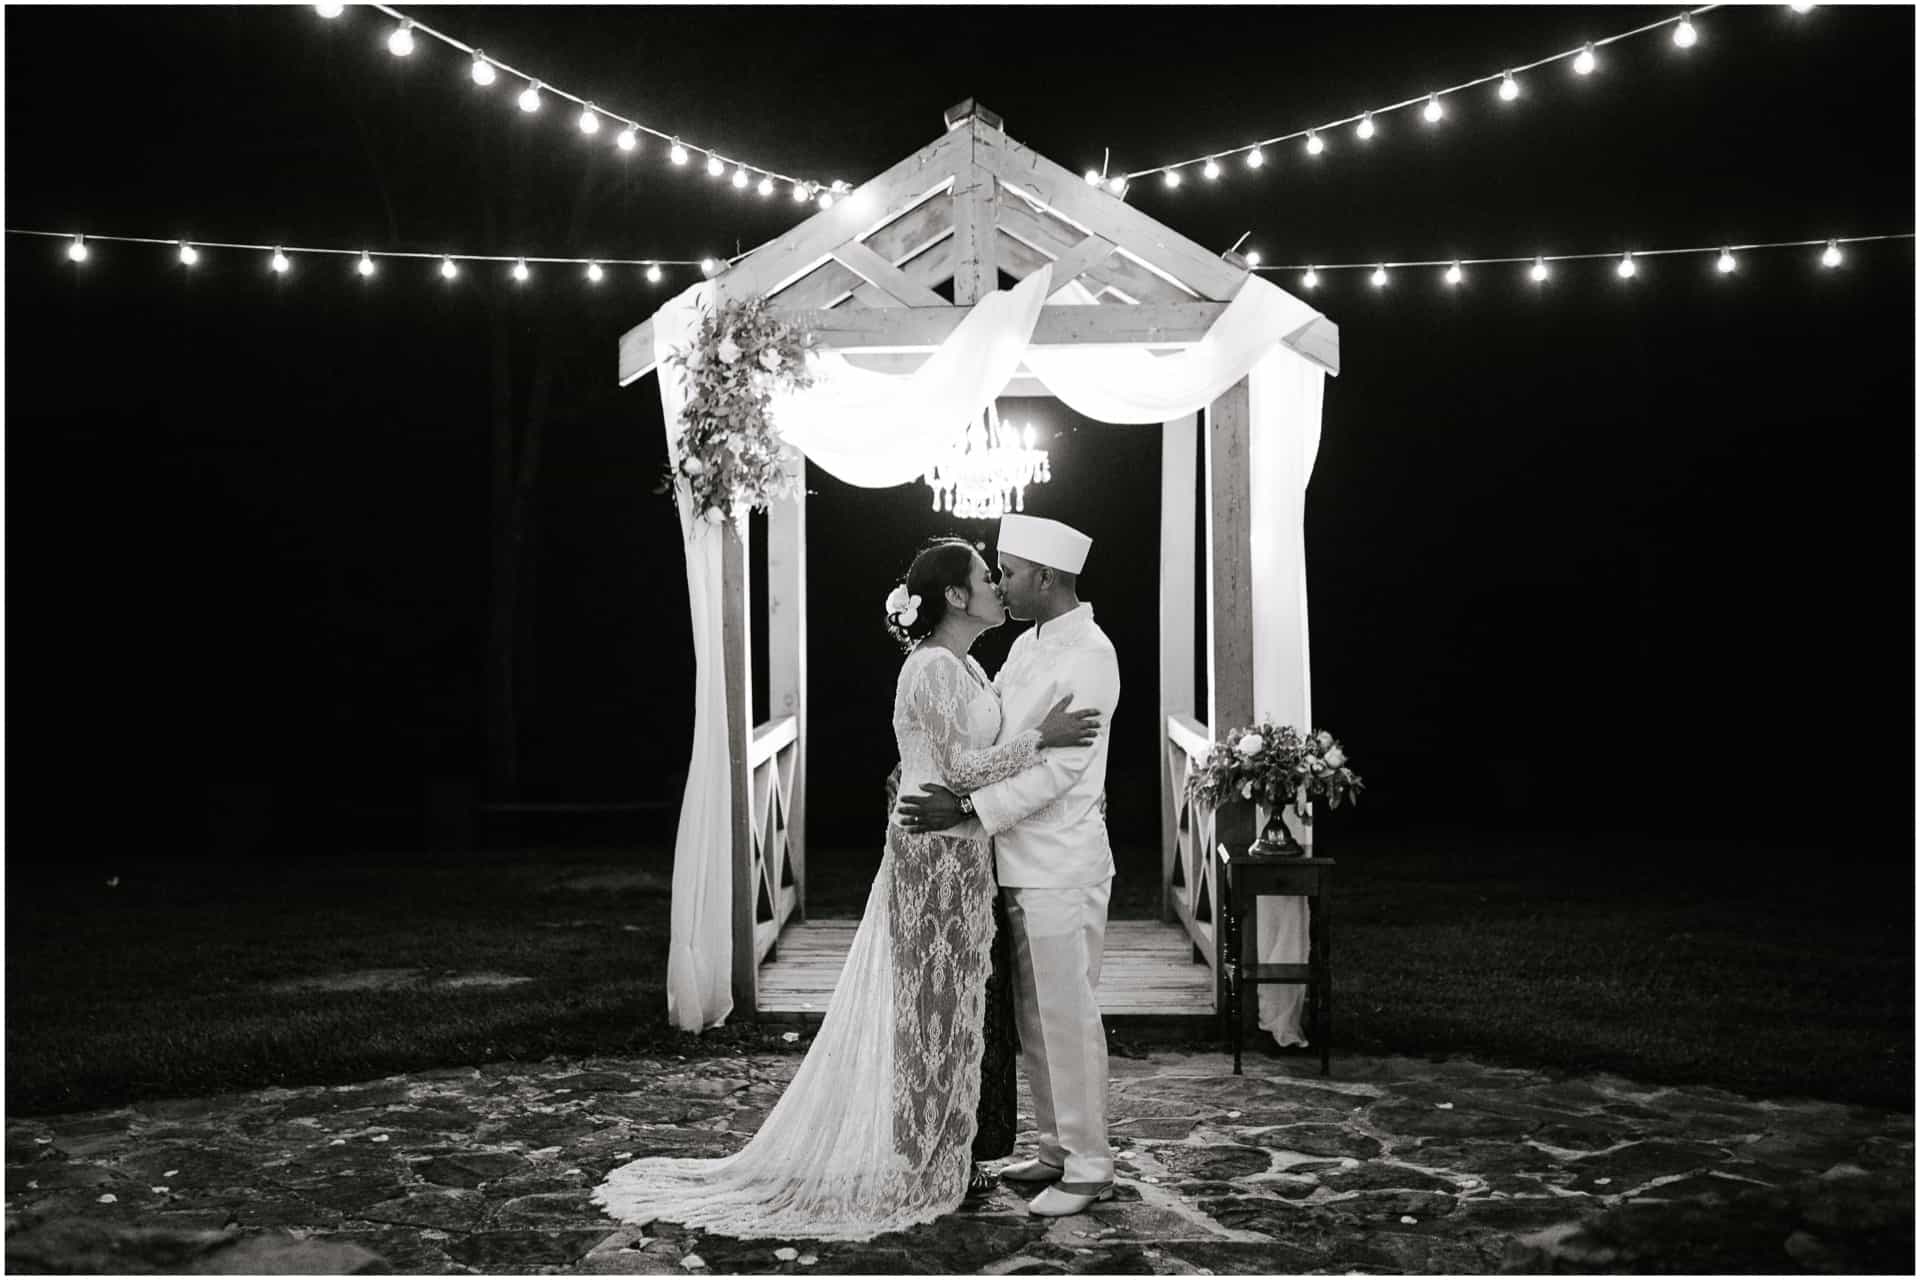 Nadia and Atte - Indonesian Wedding Night Shot at Monte Sano Lodge